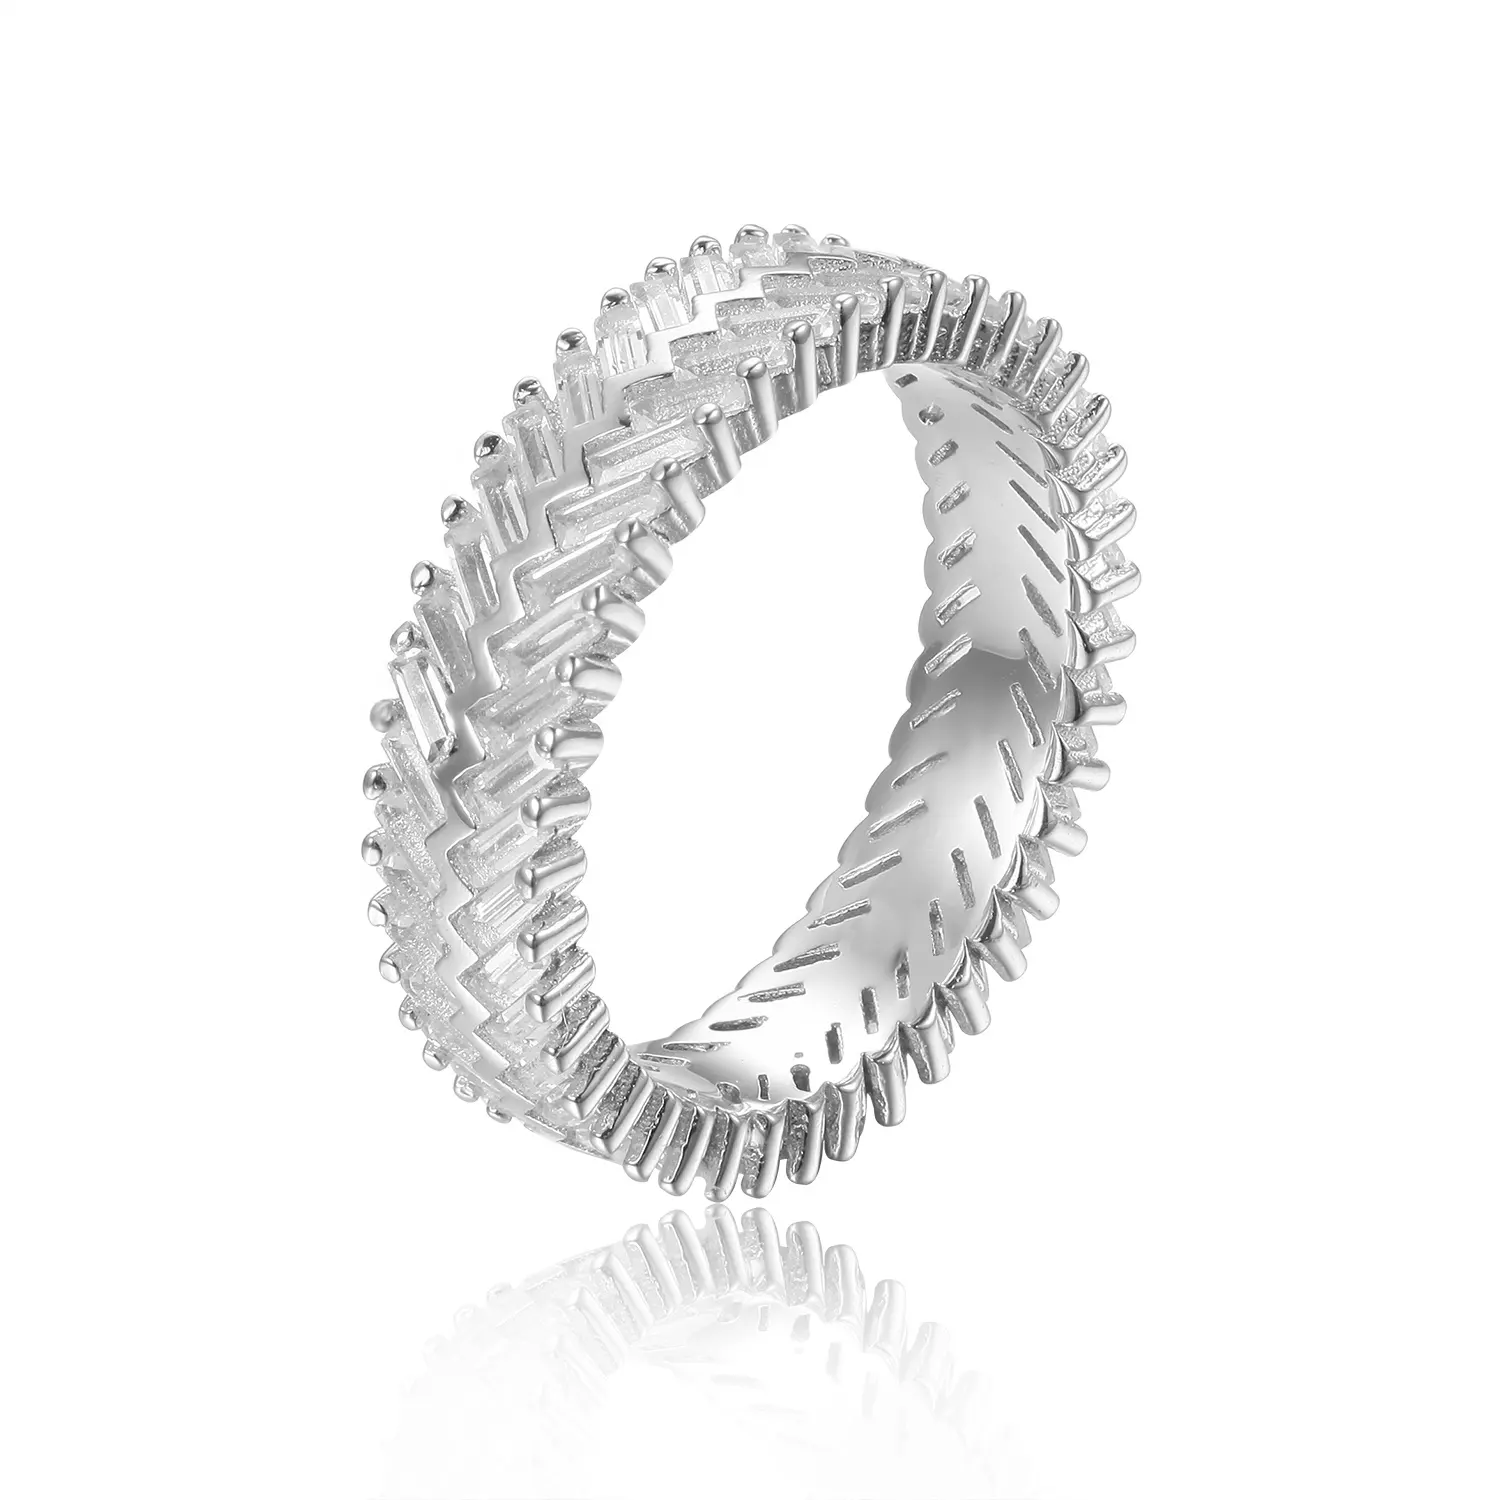 Abiding Jewelry 925 Silver Bridal Jewelry Baguette Cut Zircon Diamond Engagement Wedding Ring